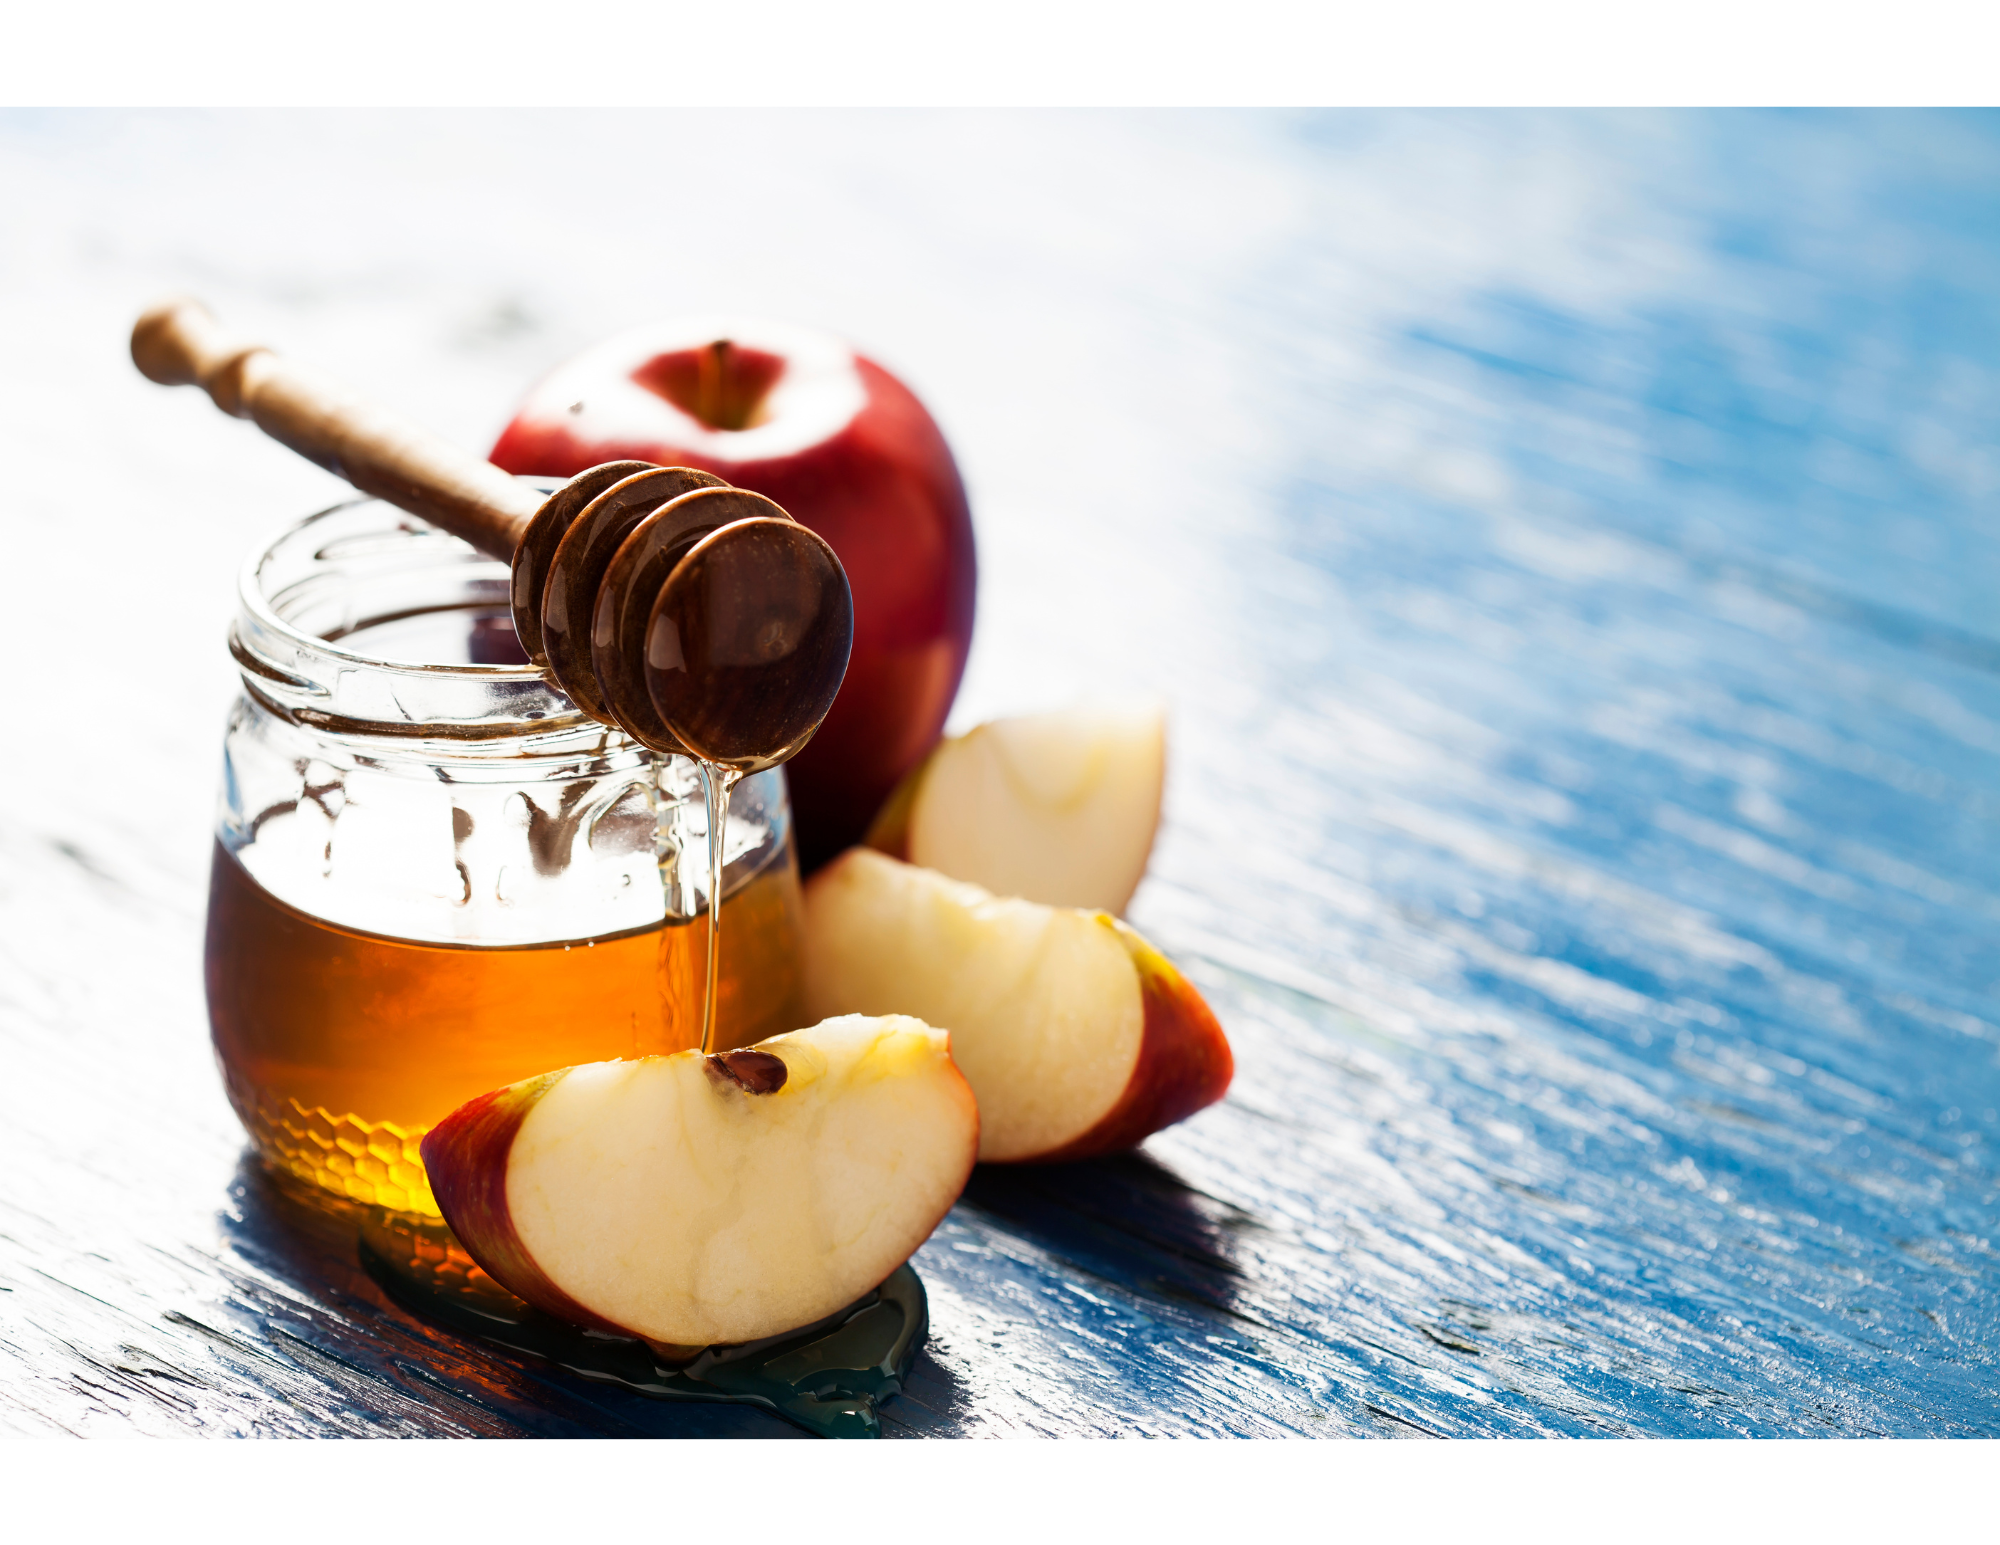 apples and honey for Rosh Hashanah